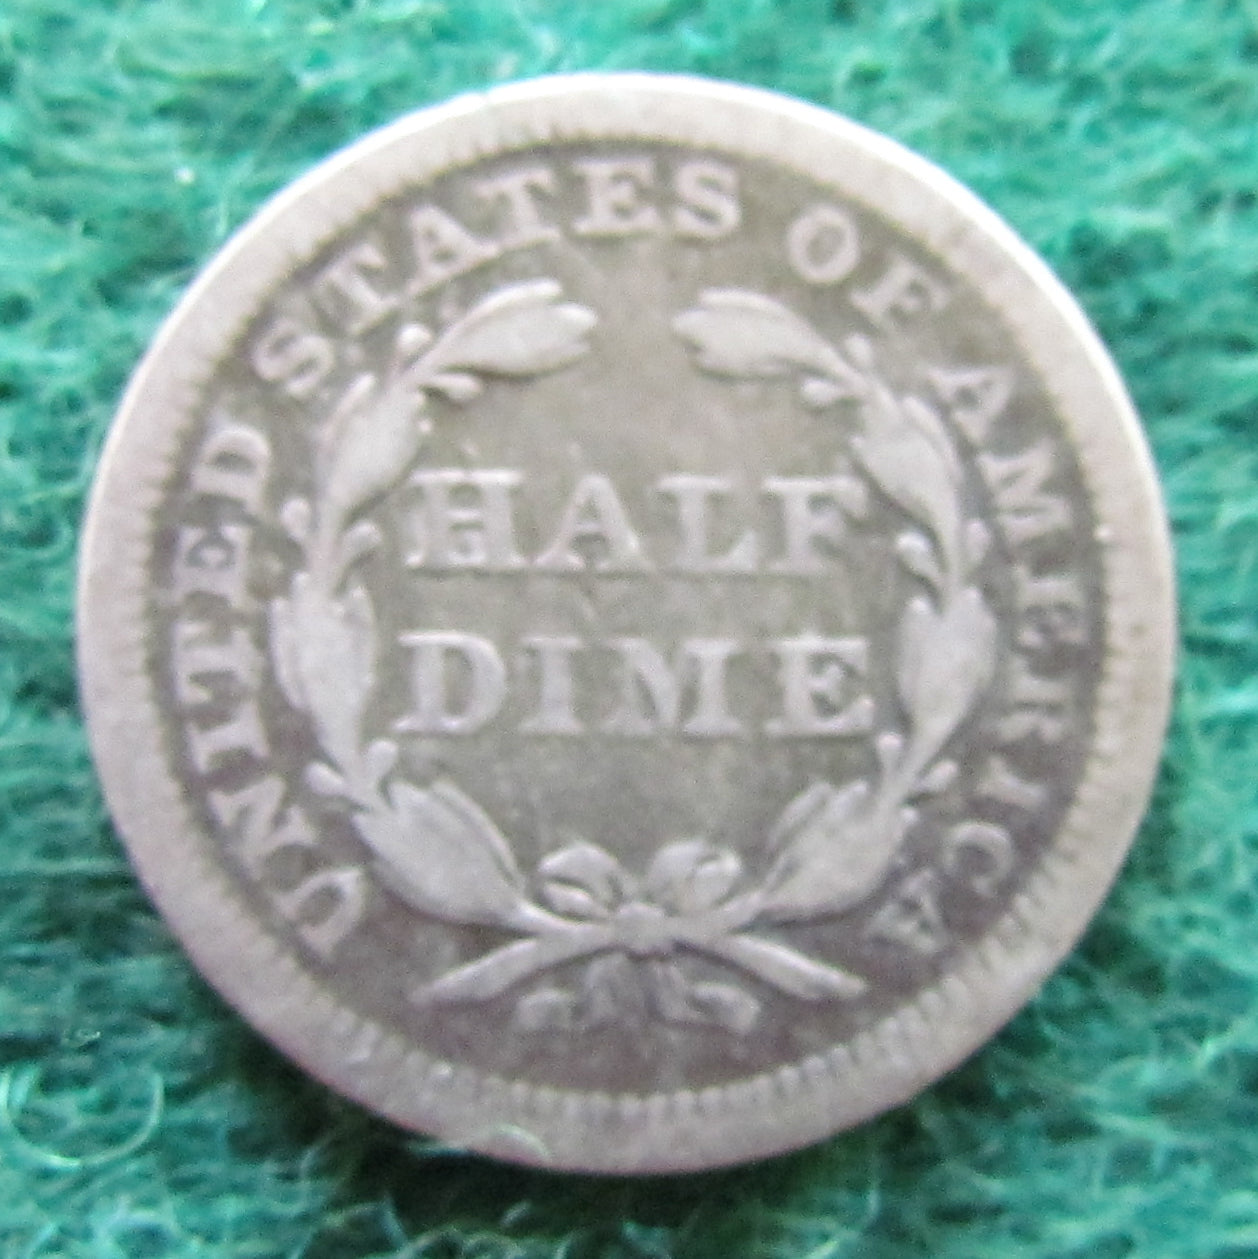 USA American 1852 Silver Seated Liberty Half Dime Coin - Circulated